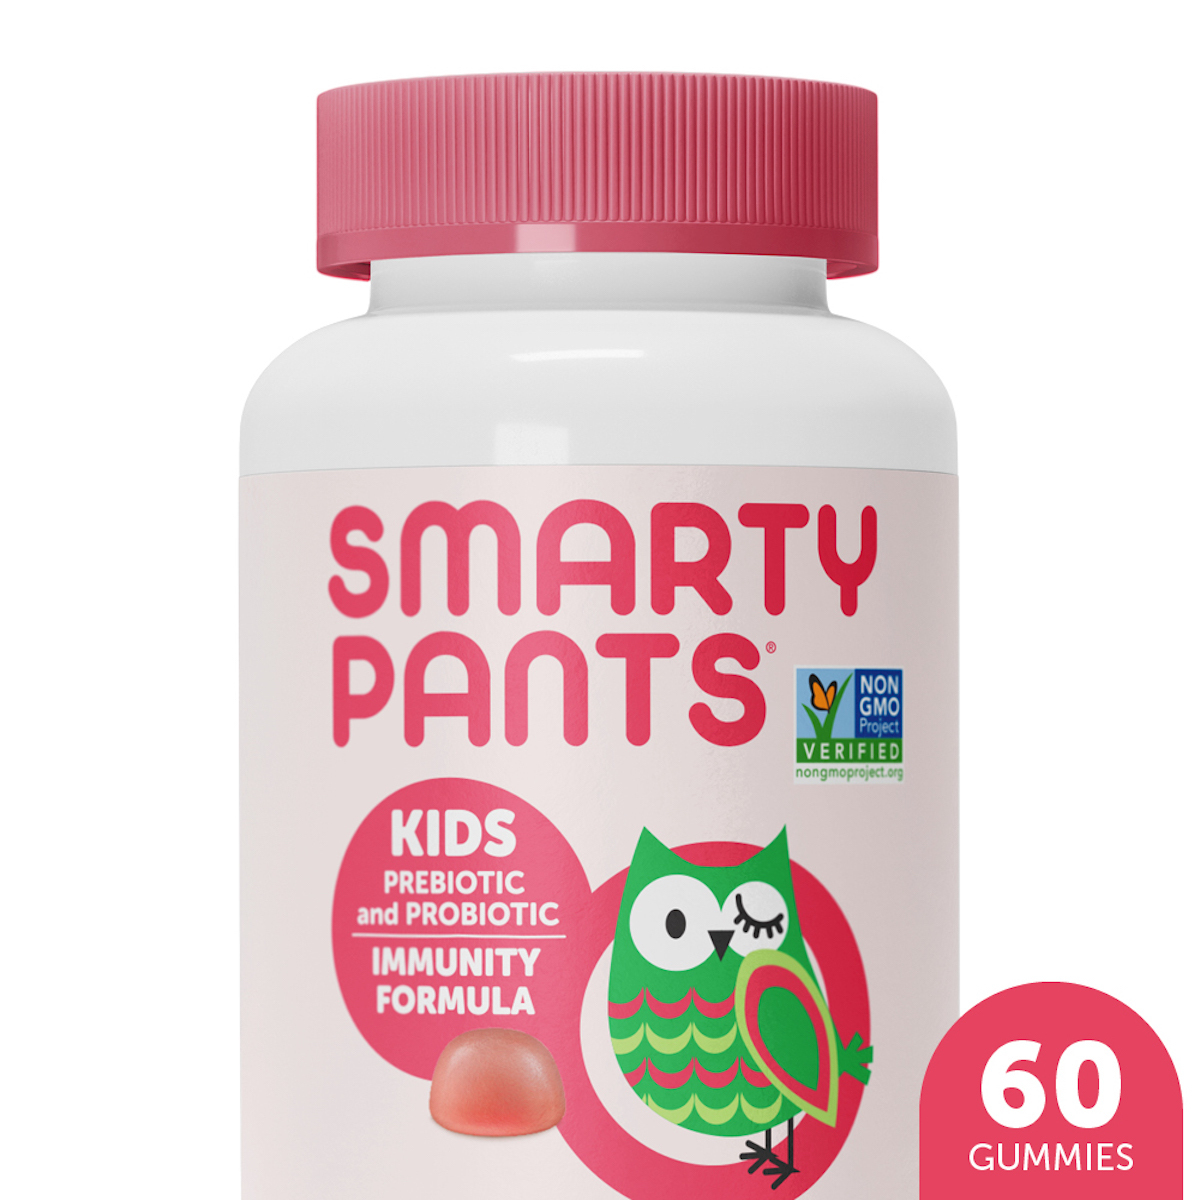 SmartyPants Kids Prebiotic & Probiotic Immunity & Digestive Health Gummy Vitamins - Strawberry CrÃ¨me - 60ct - image 1 of 8